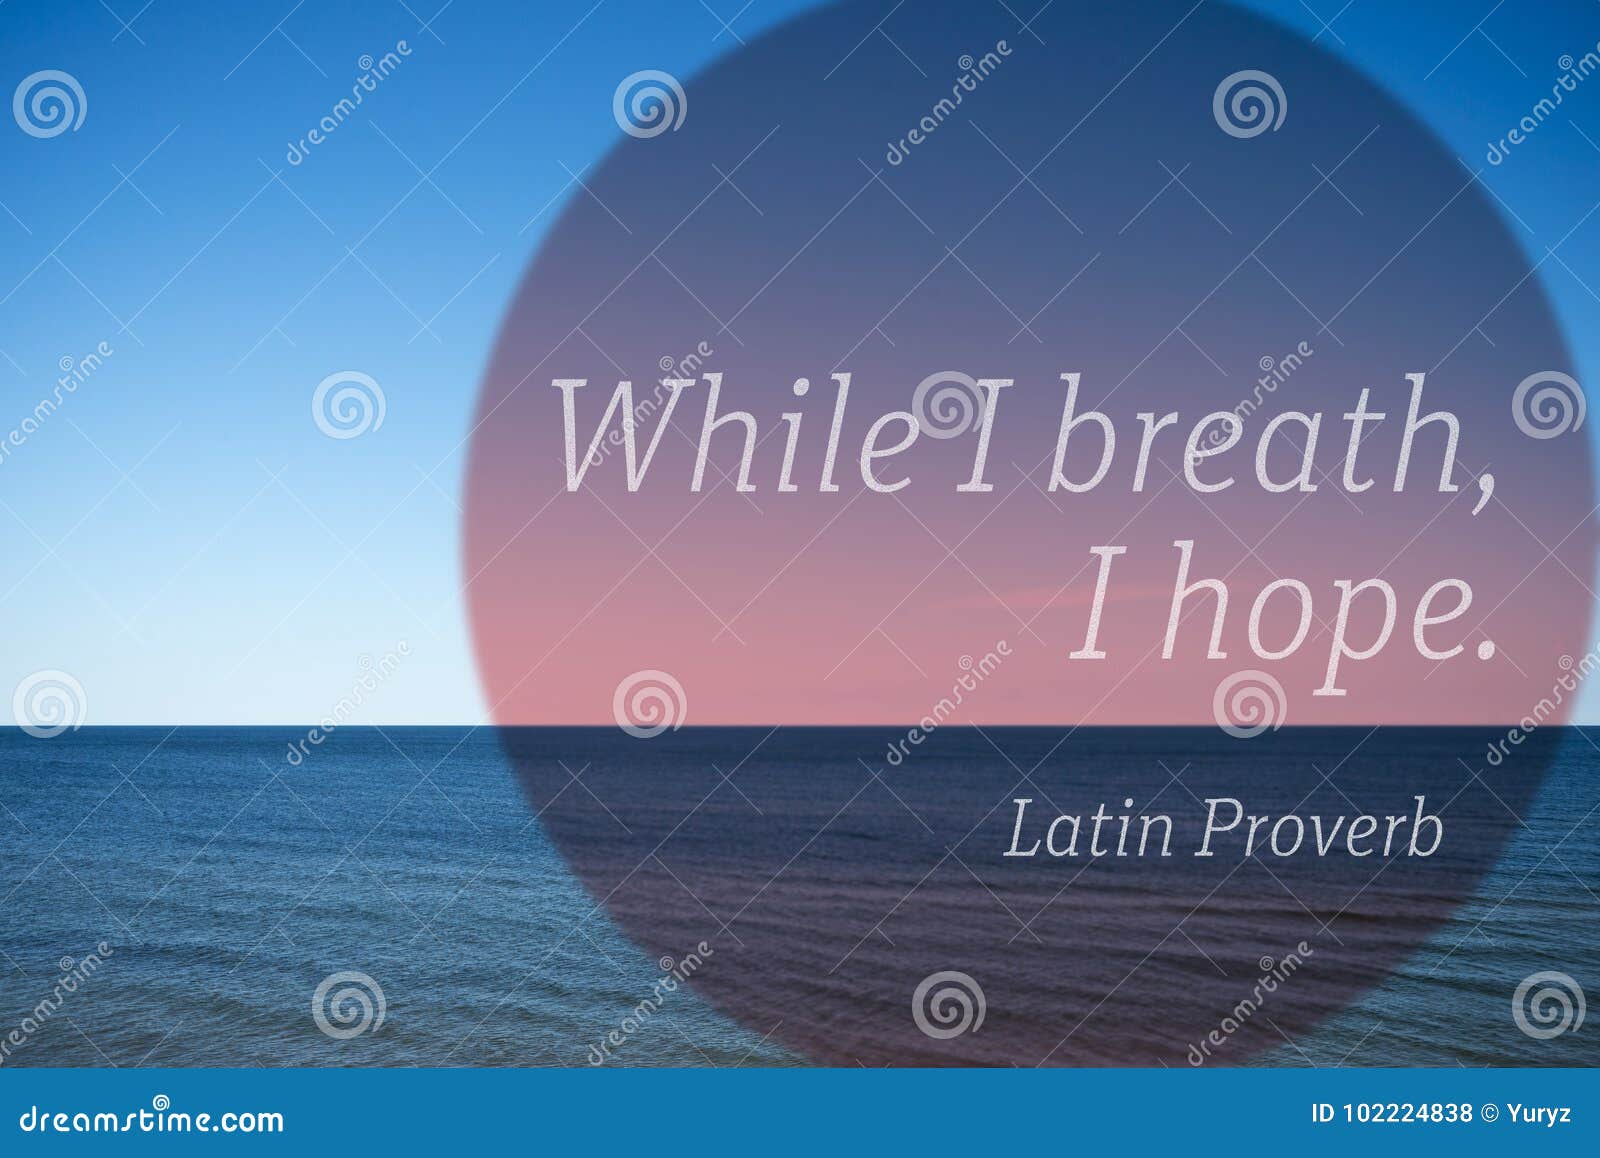 breath, hope proverb